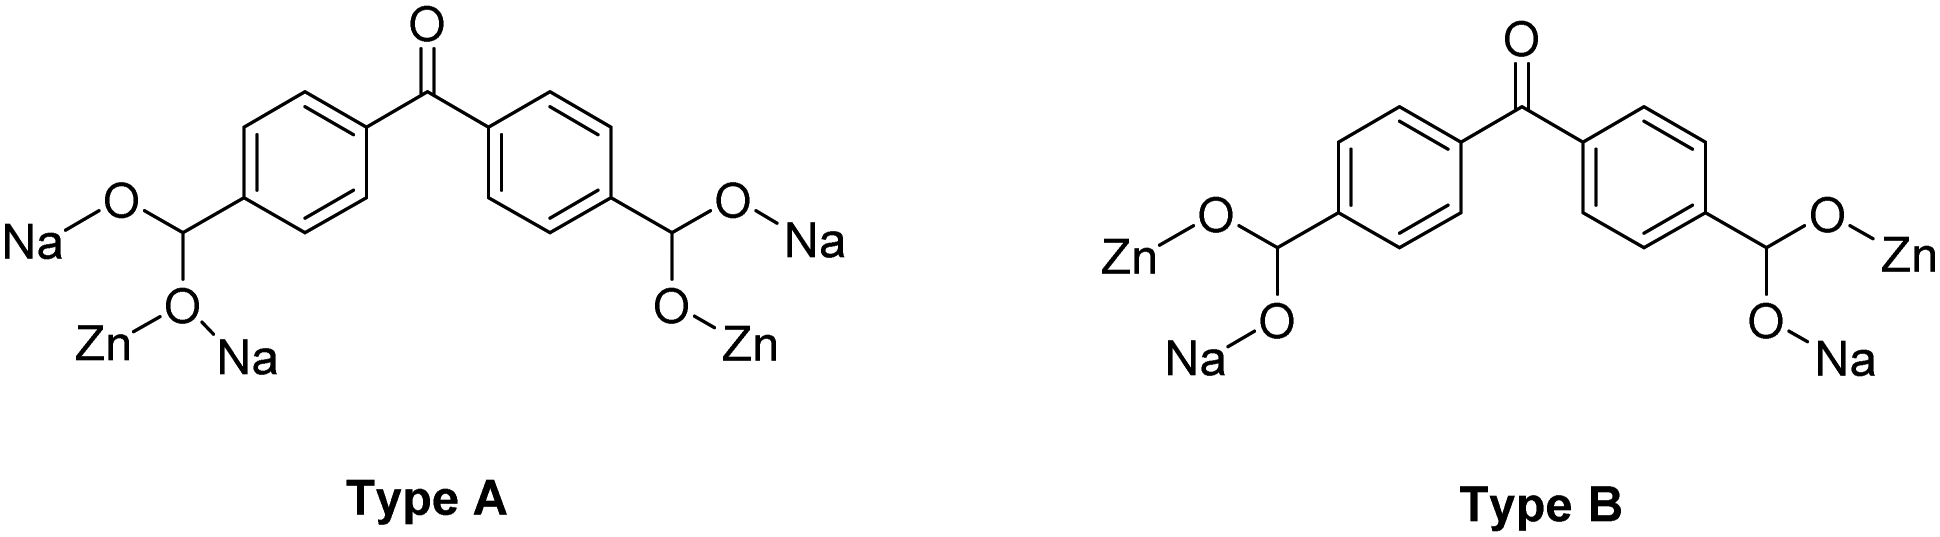 A Biocompatible Znna2 Based Metal Organic Framework With High Ibuprofen Nitric Oxide And Metal Uptake Capacity Materials Advances Rsc Publishing